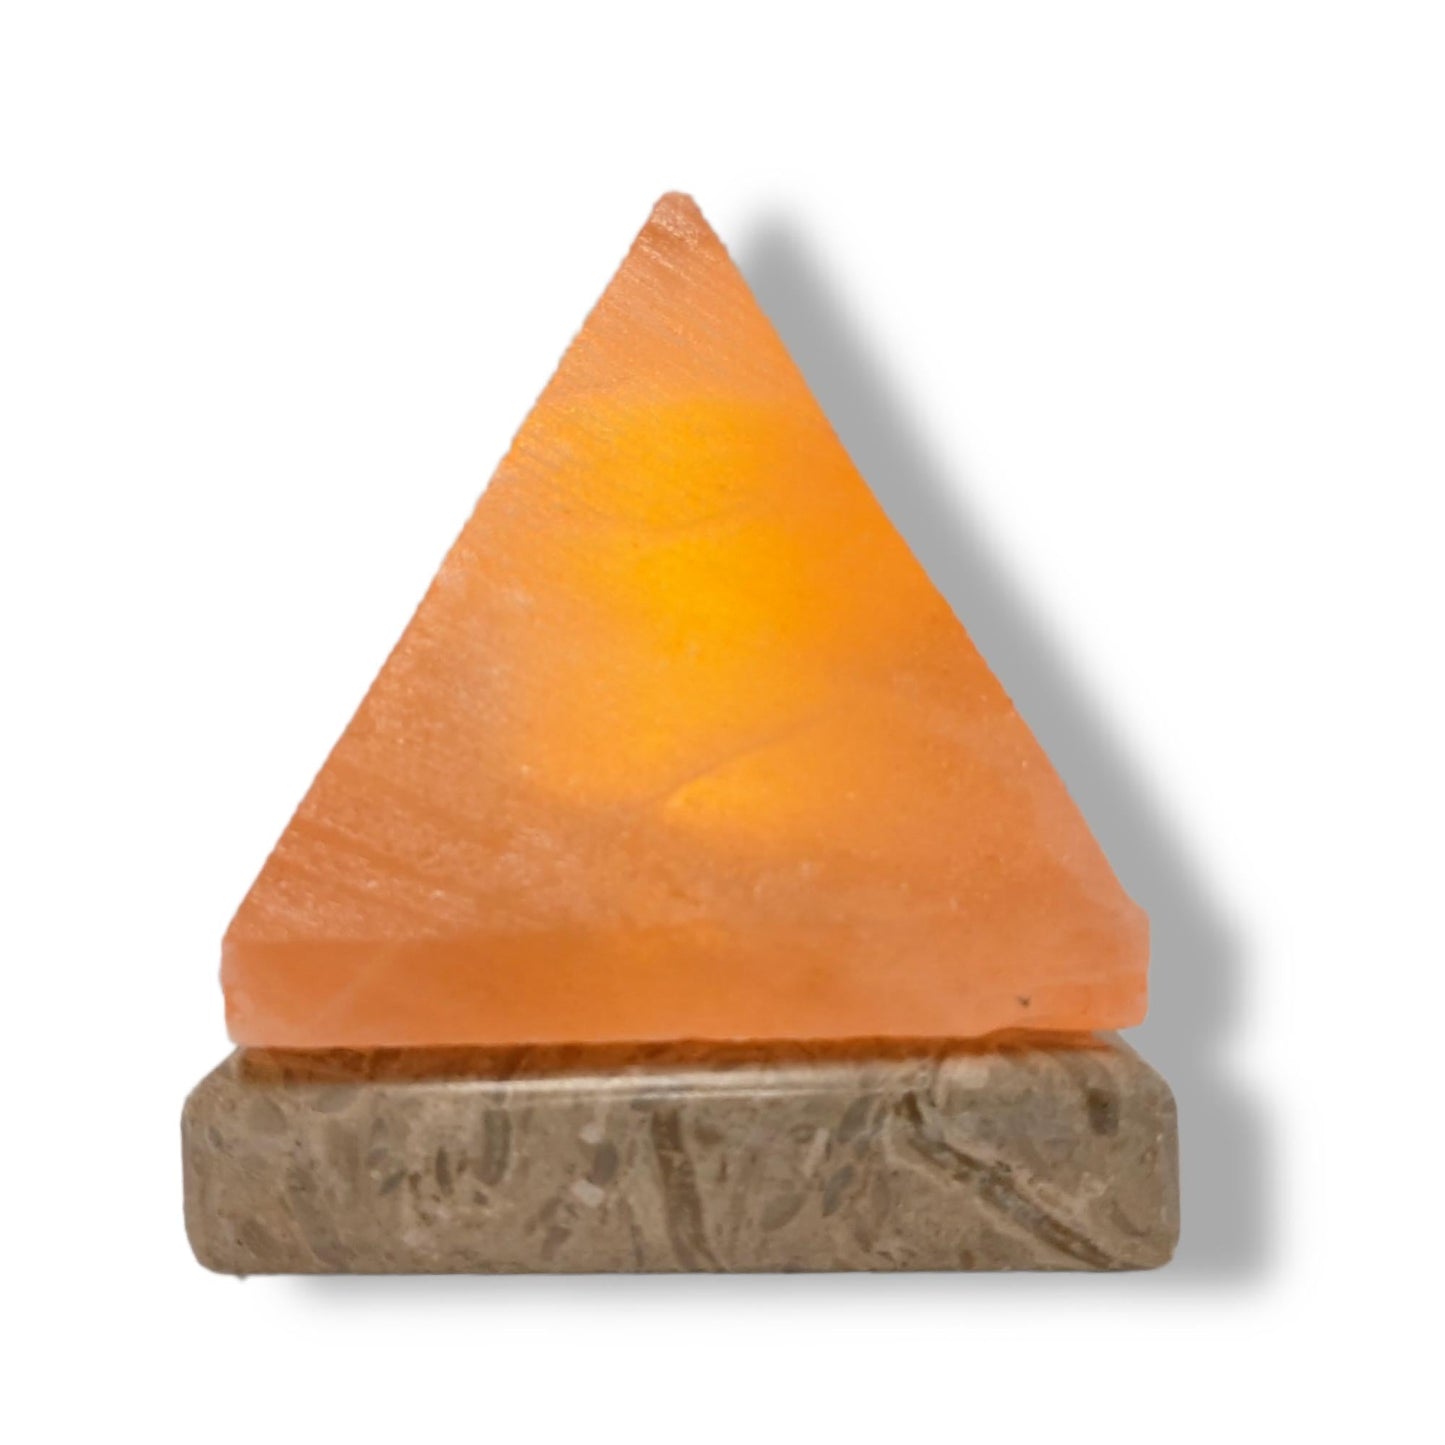 USB Himalayan Salt Lamp - Pyramid Triangle Carved Shape Pink Crystal Rock Light